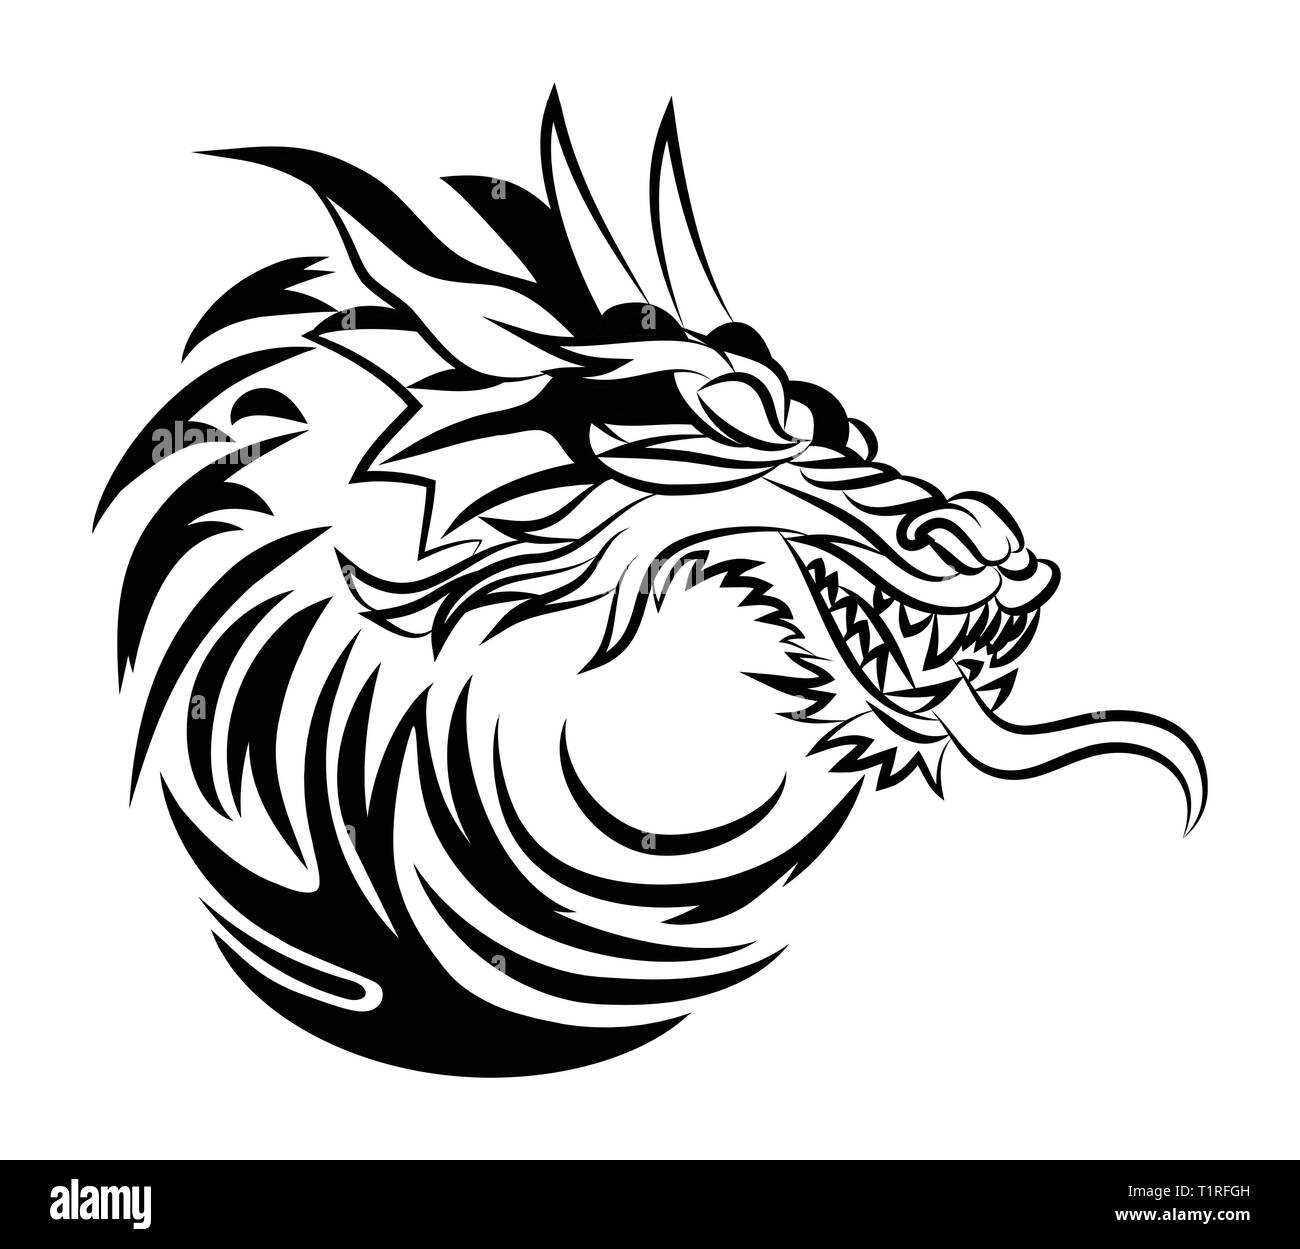 70 Dragon Head Tattoo Pictures Illustrations RoyaltyFree Vector Graphics   Clip Art  iStock